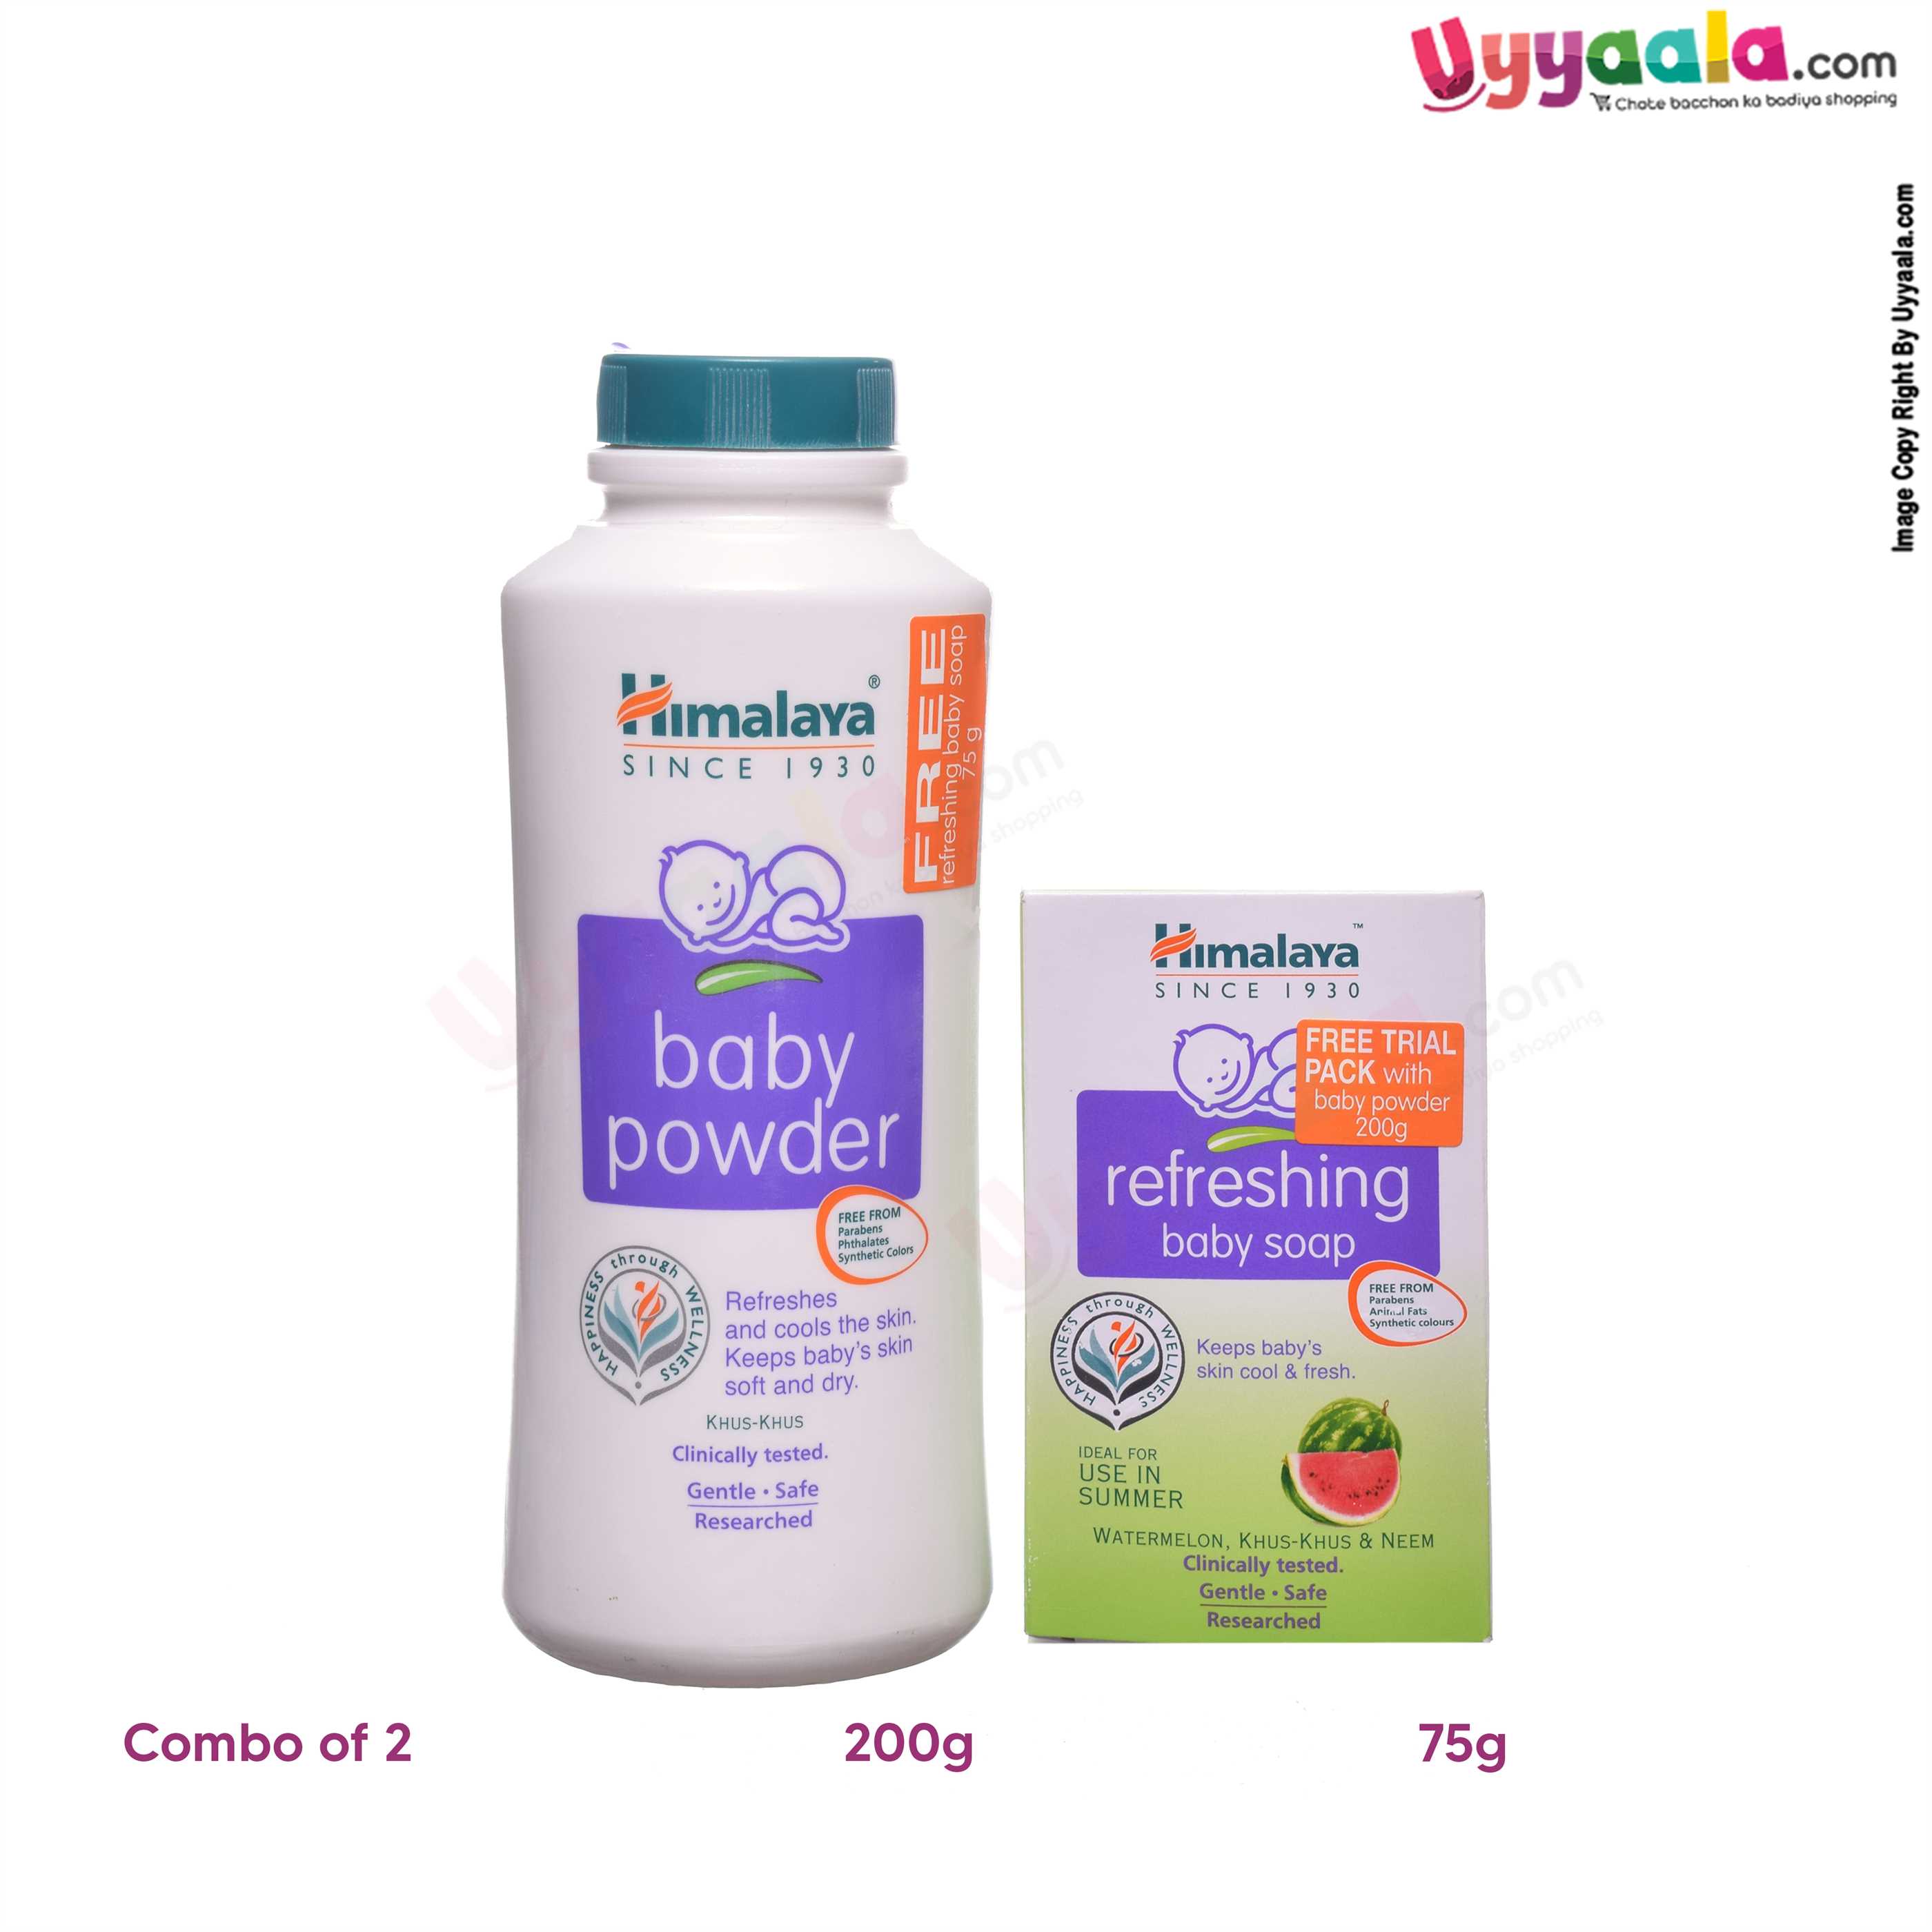 HIMALAYA Baby powder 200g with free Refreshing baby soap